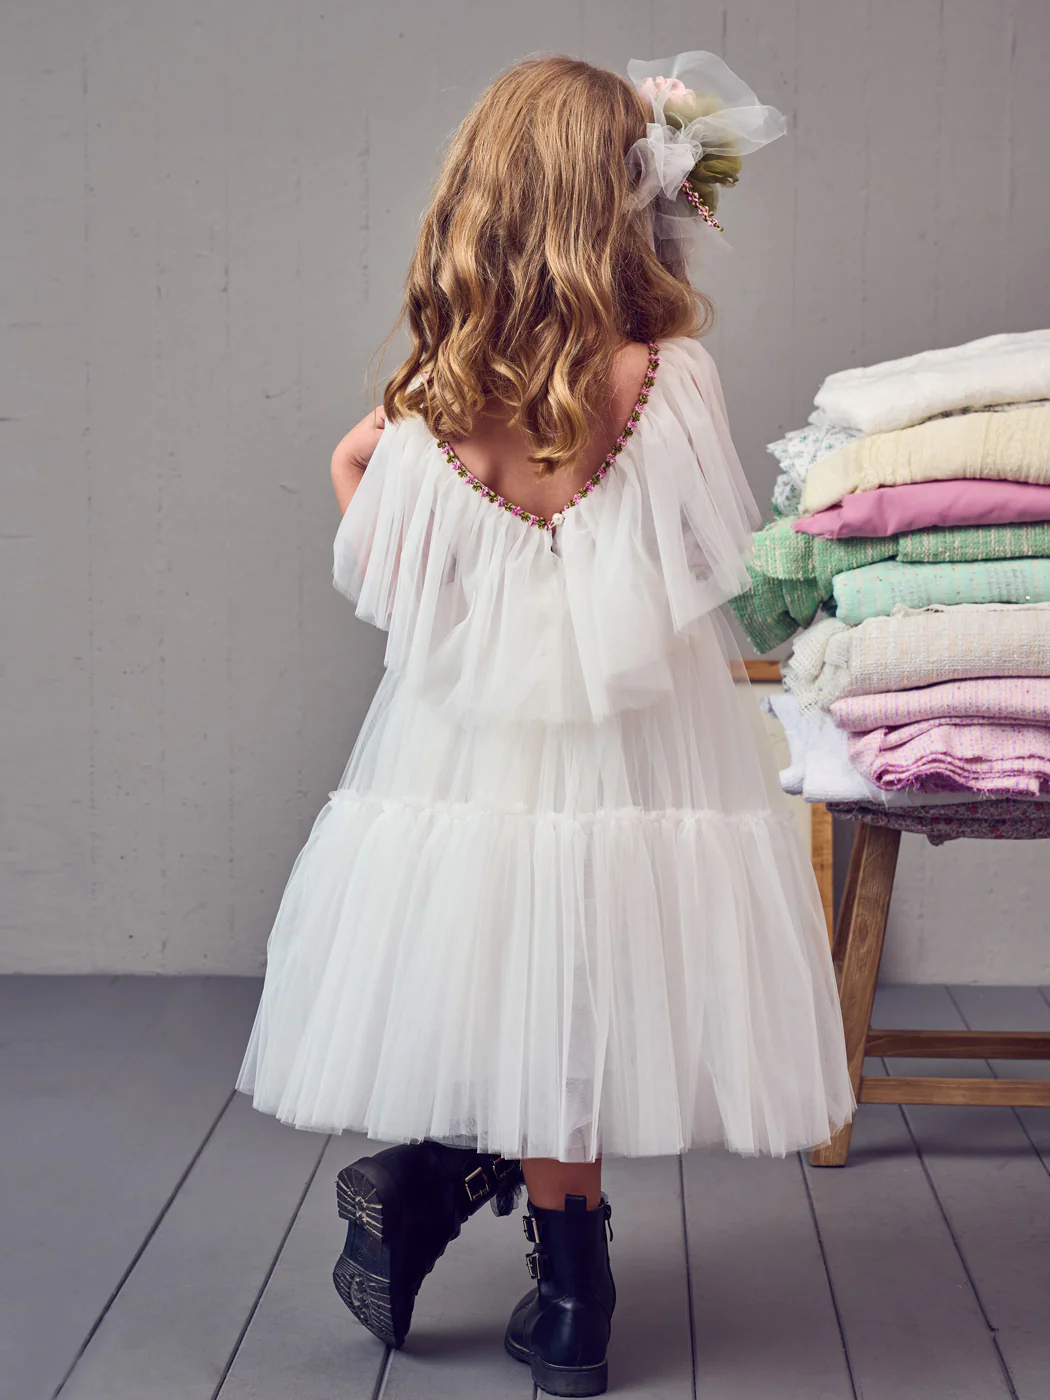 designerscat-anuse-white-dress-girl-7_1050x1400